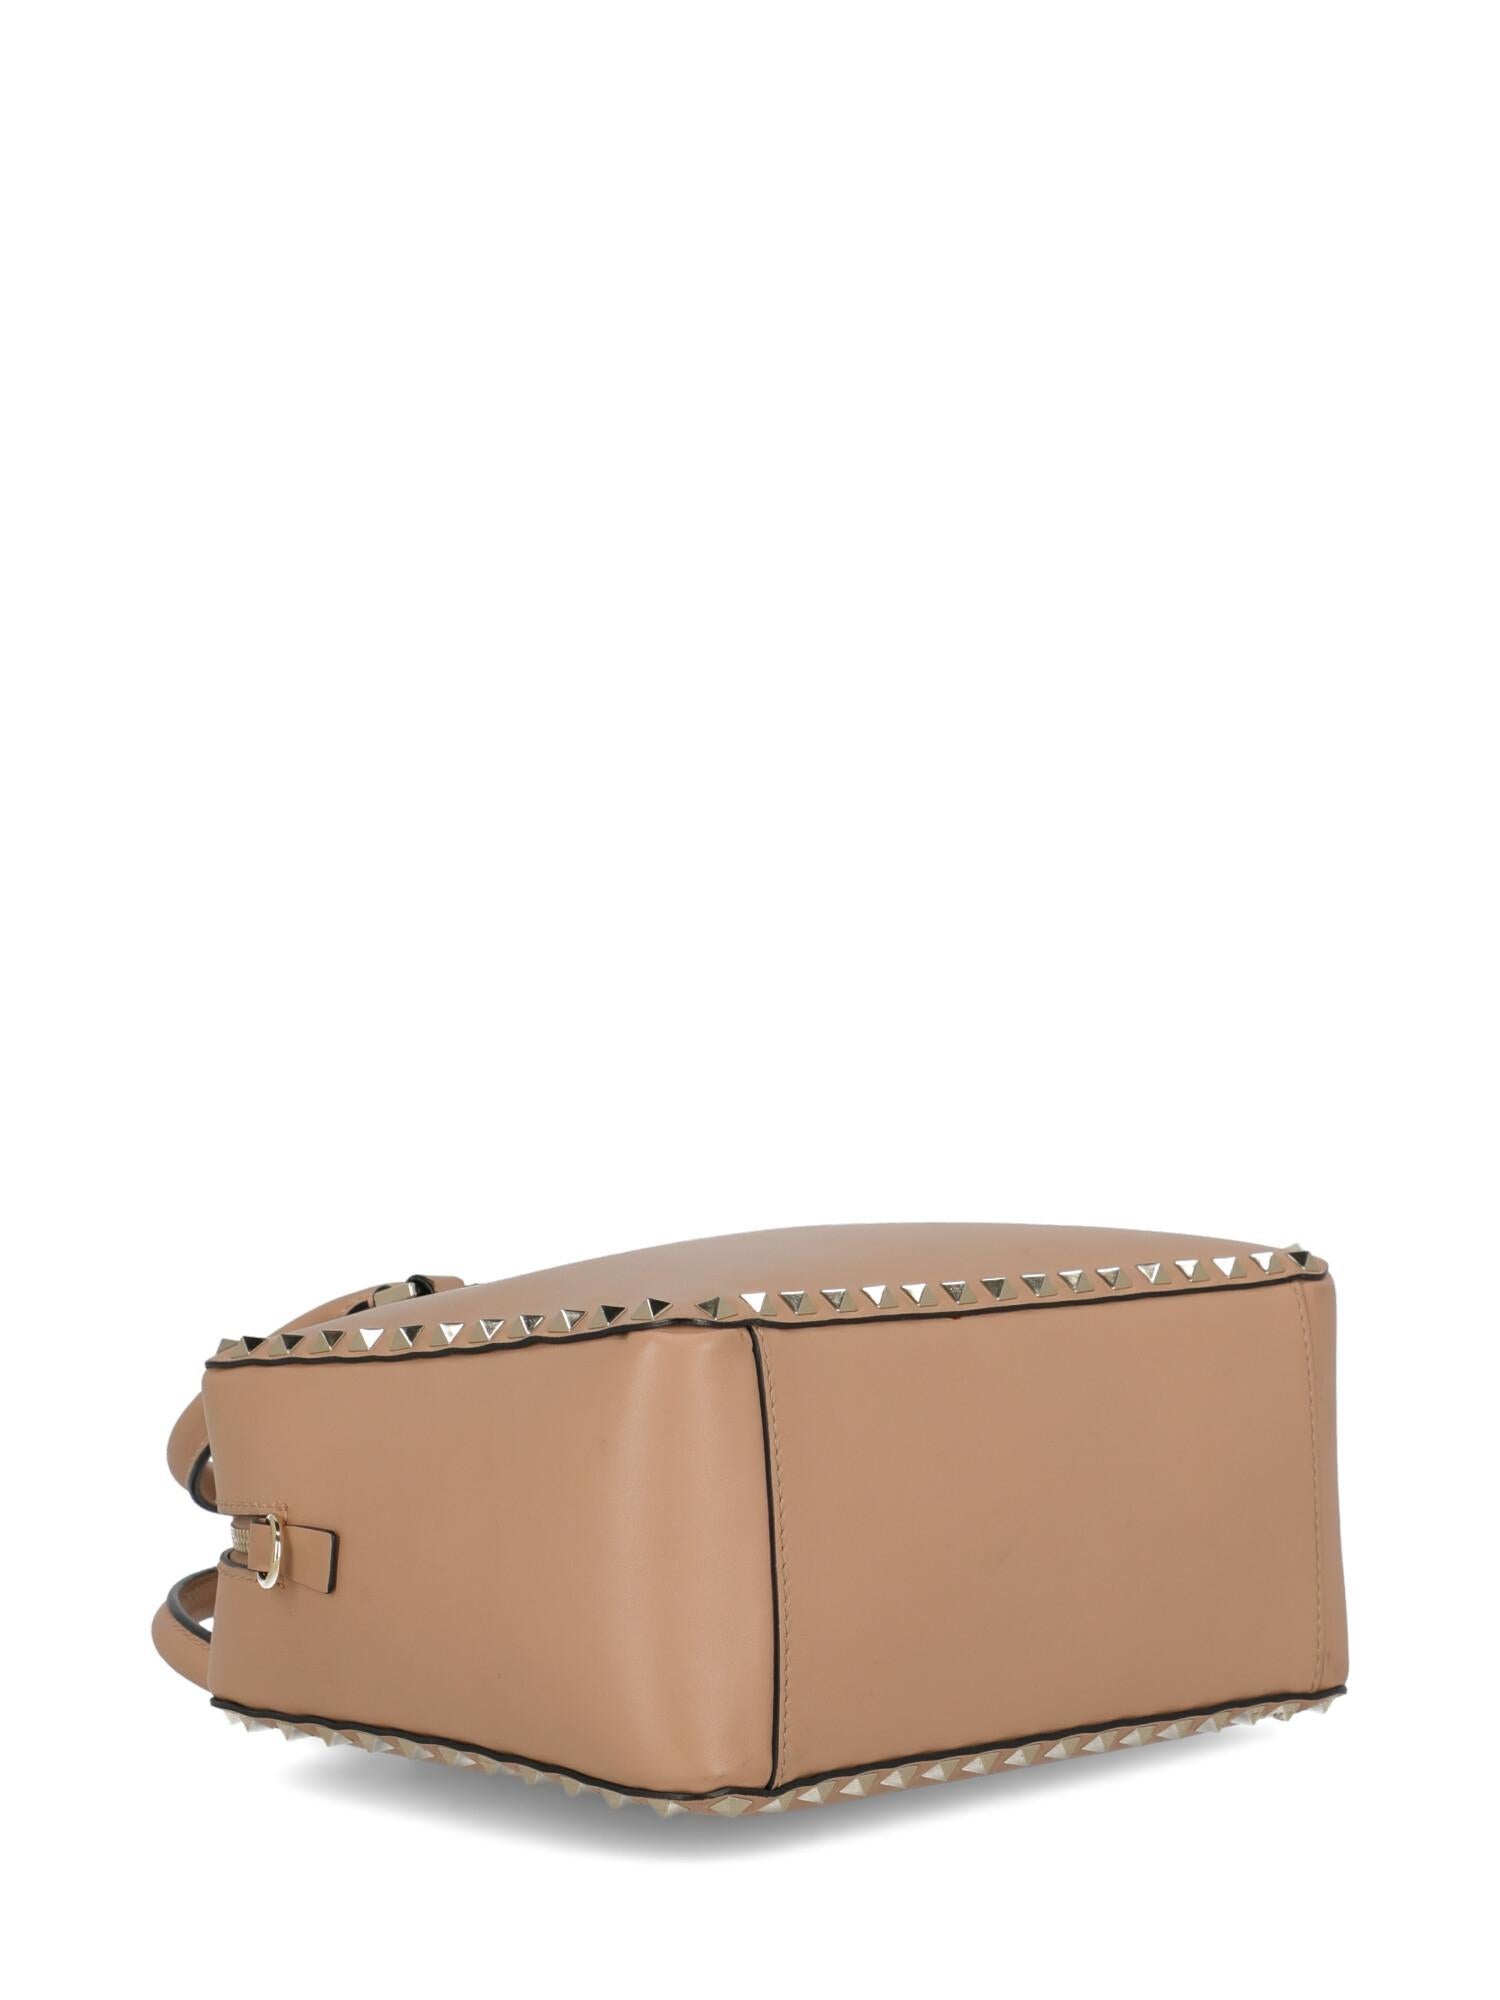 Women's Valentino Woman Handbag Pink Leather For Sale